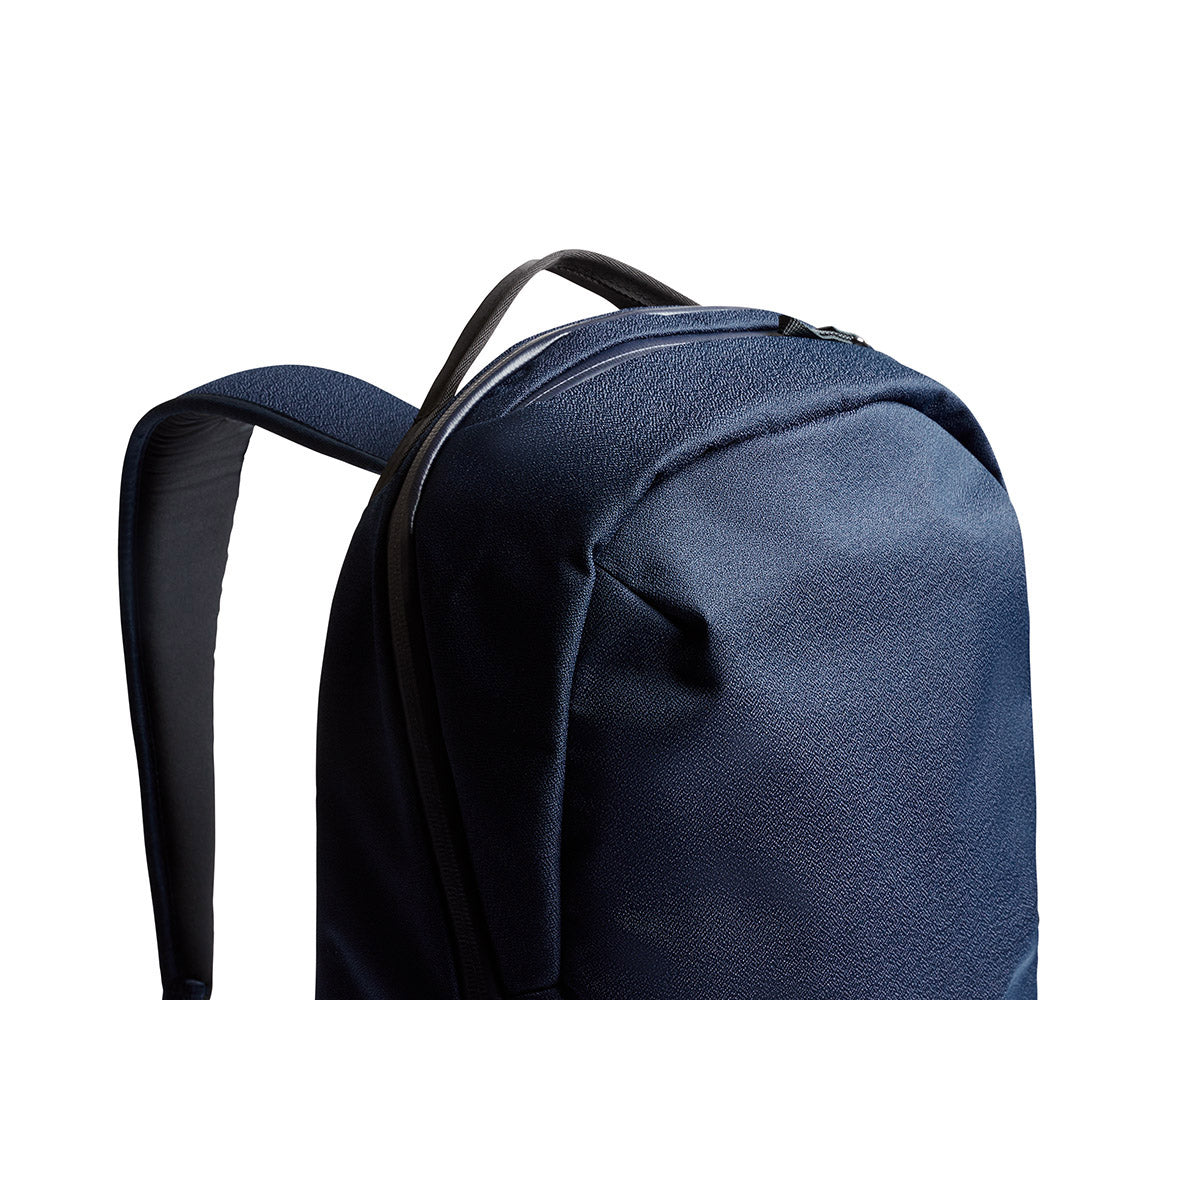 bellroy-via-backpack-navy